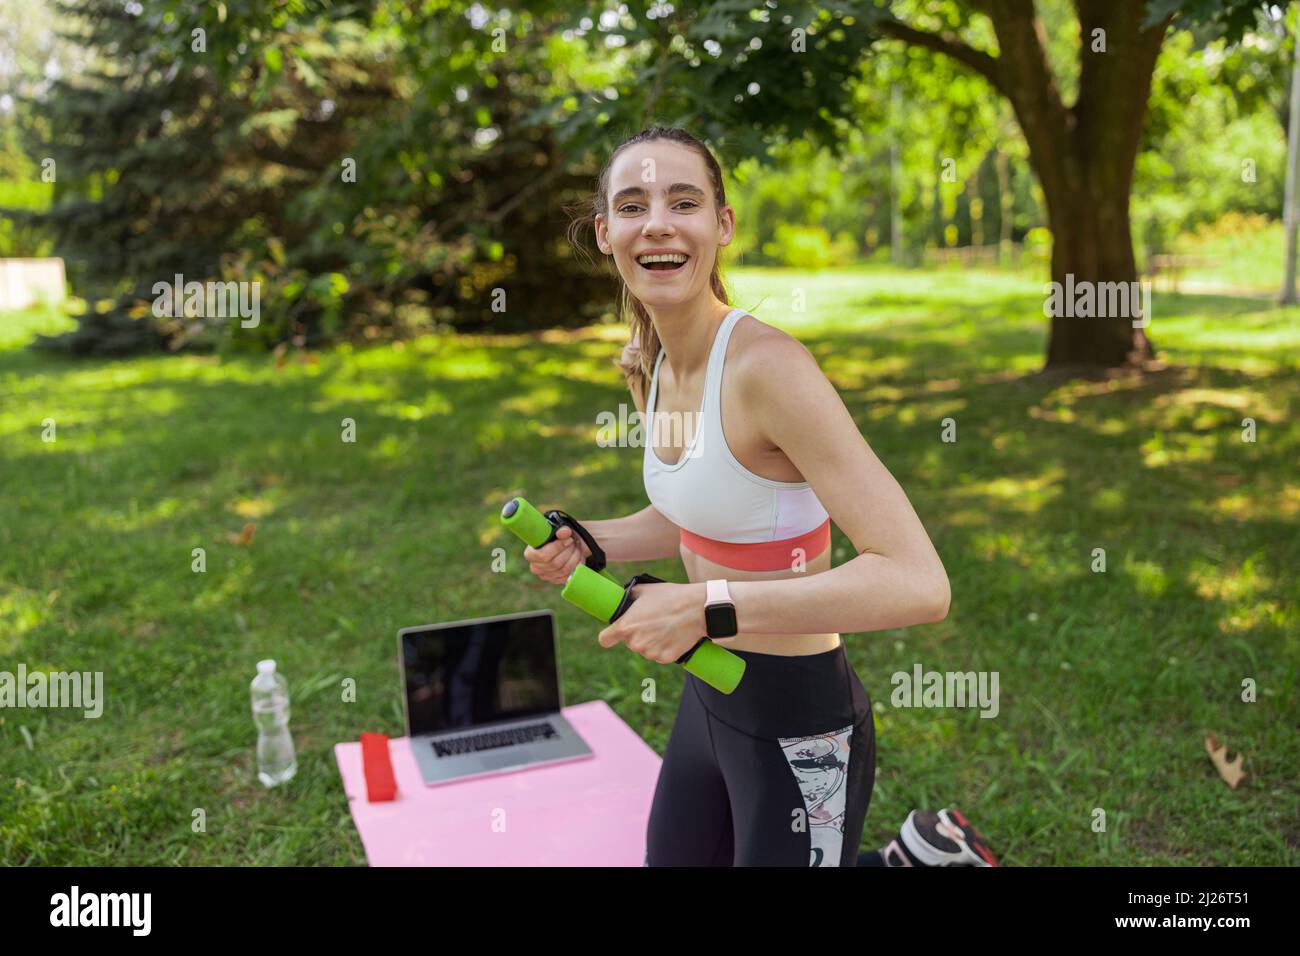 Joyful lady holds dumbbells standing on knees near laptop in green summer park Stock Photo